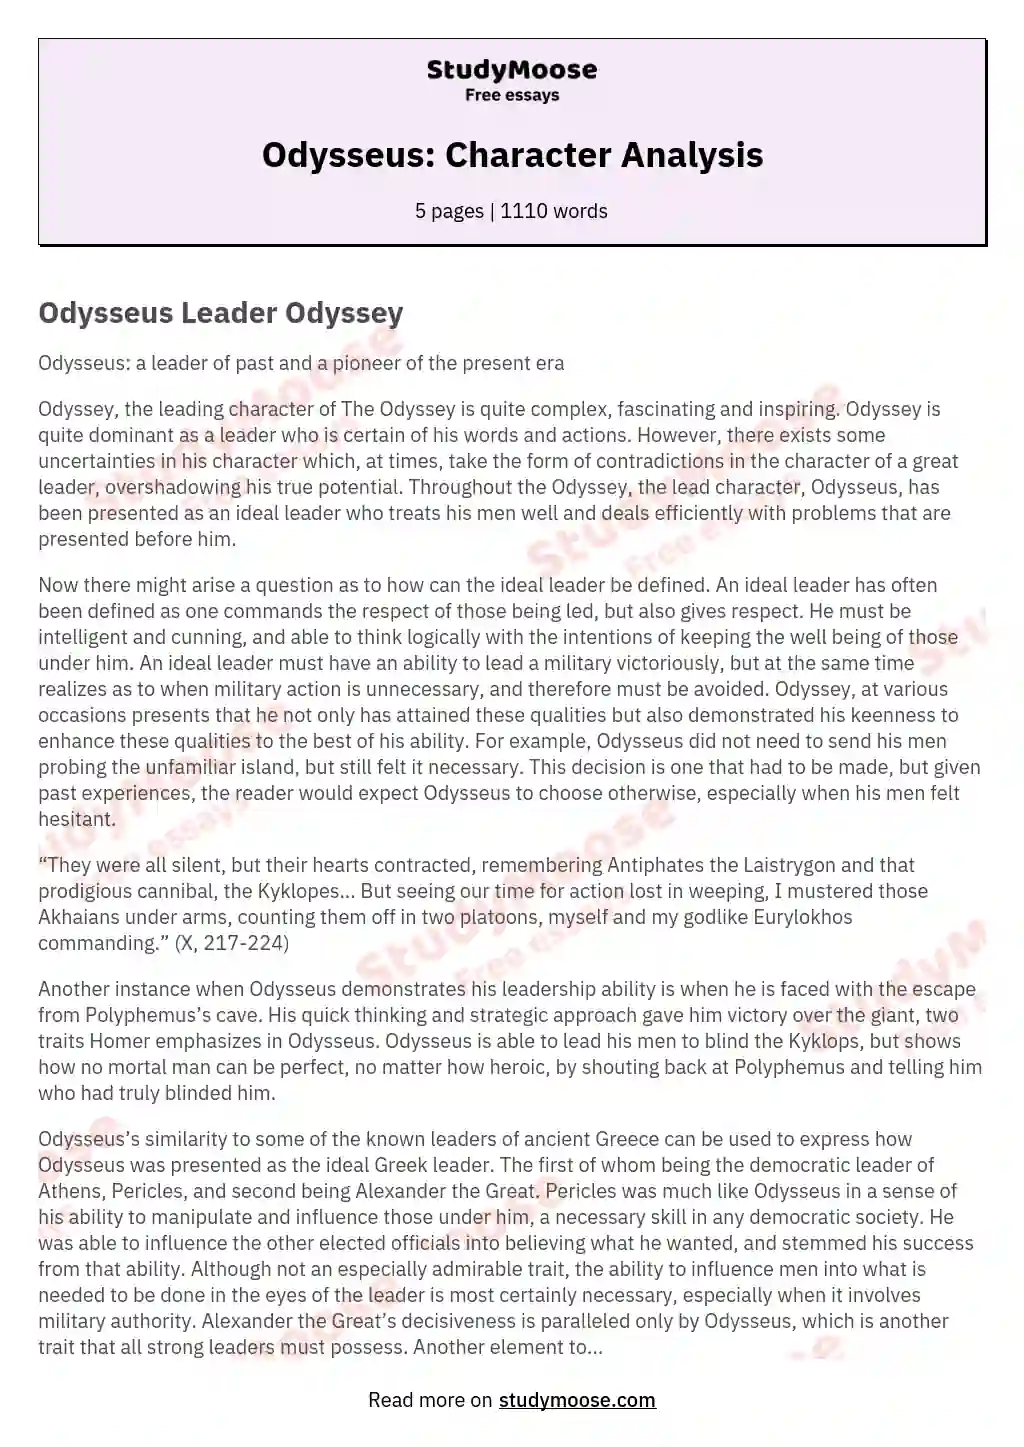 Odysseus: Character Analysis essay